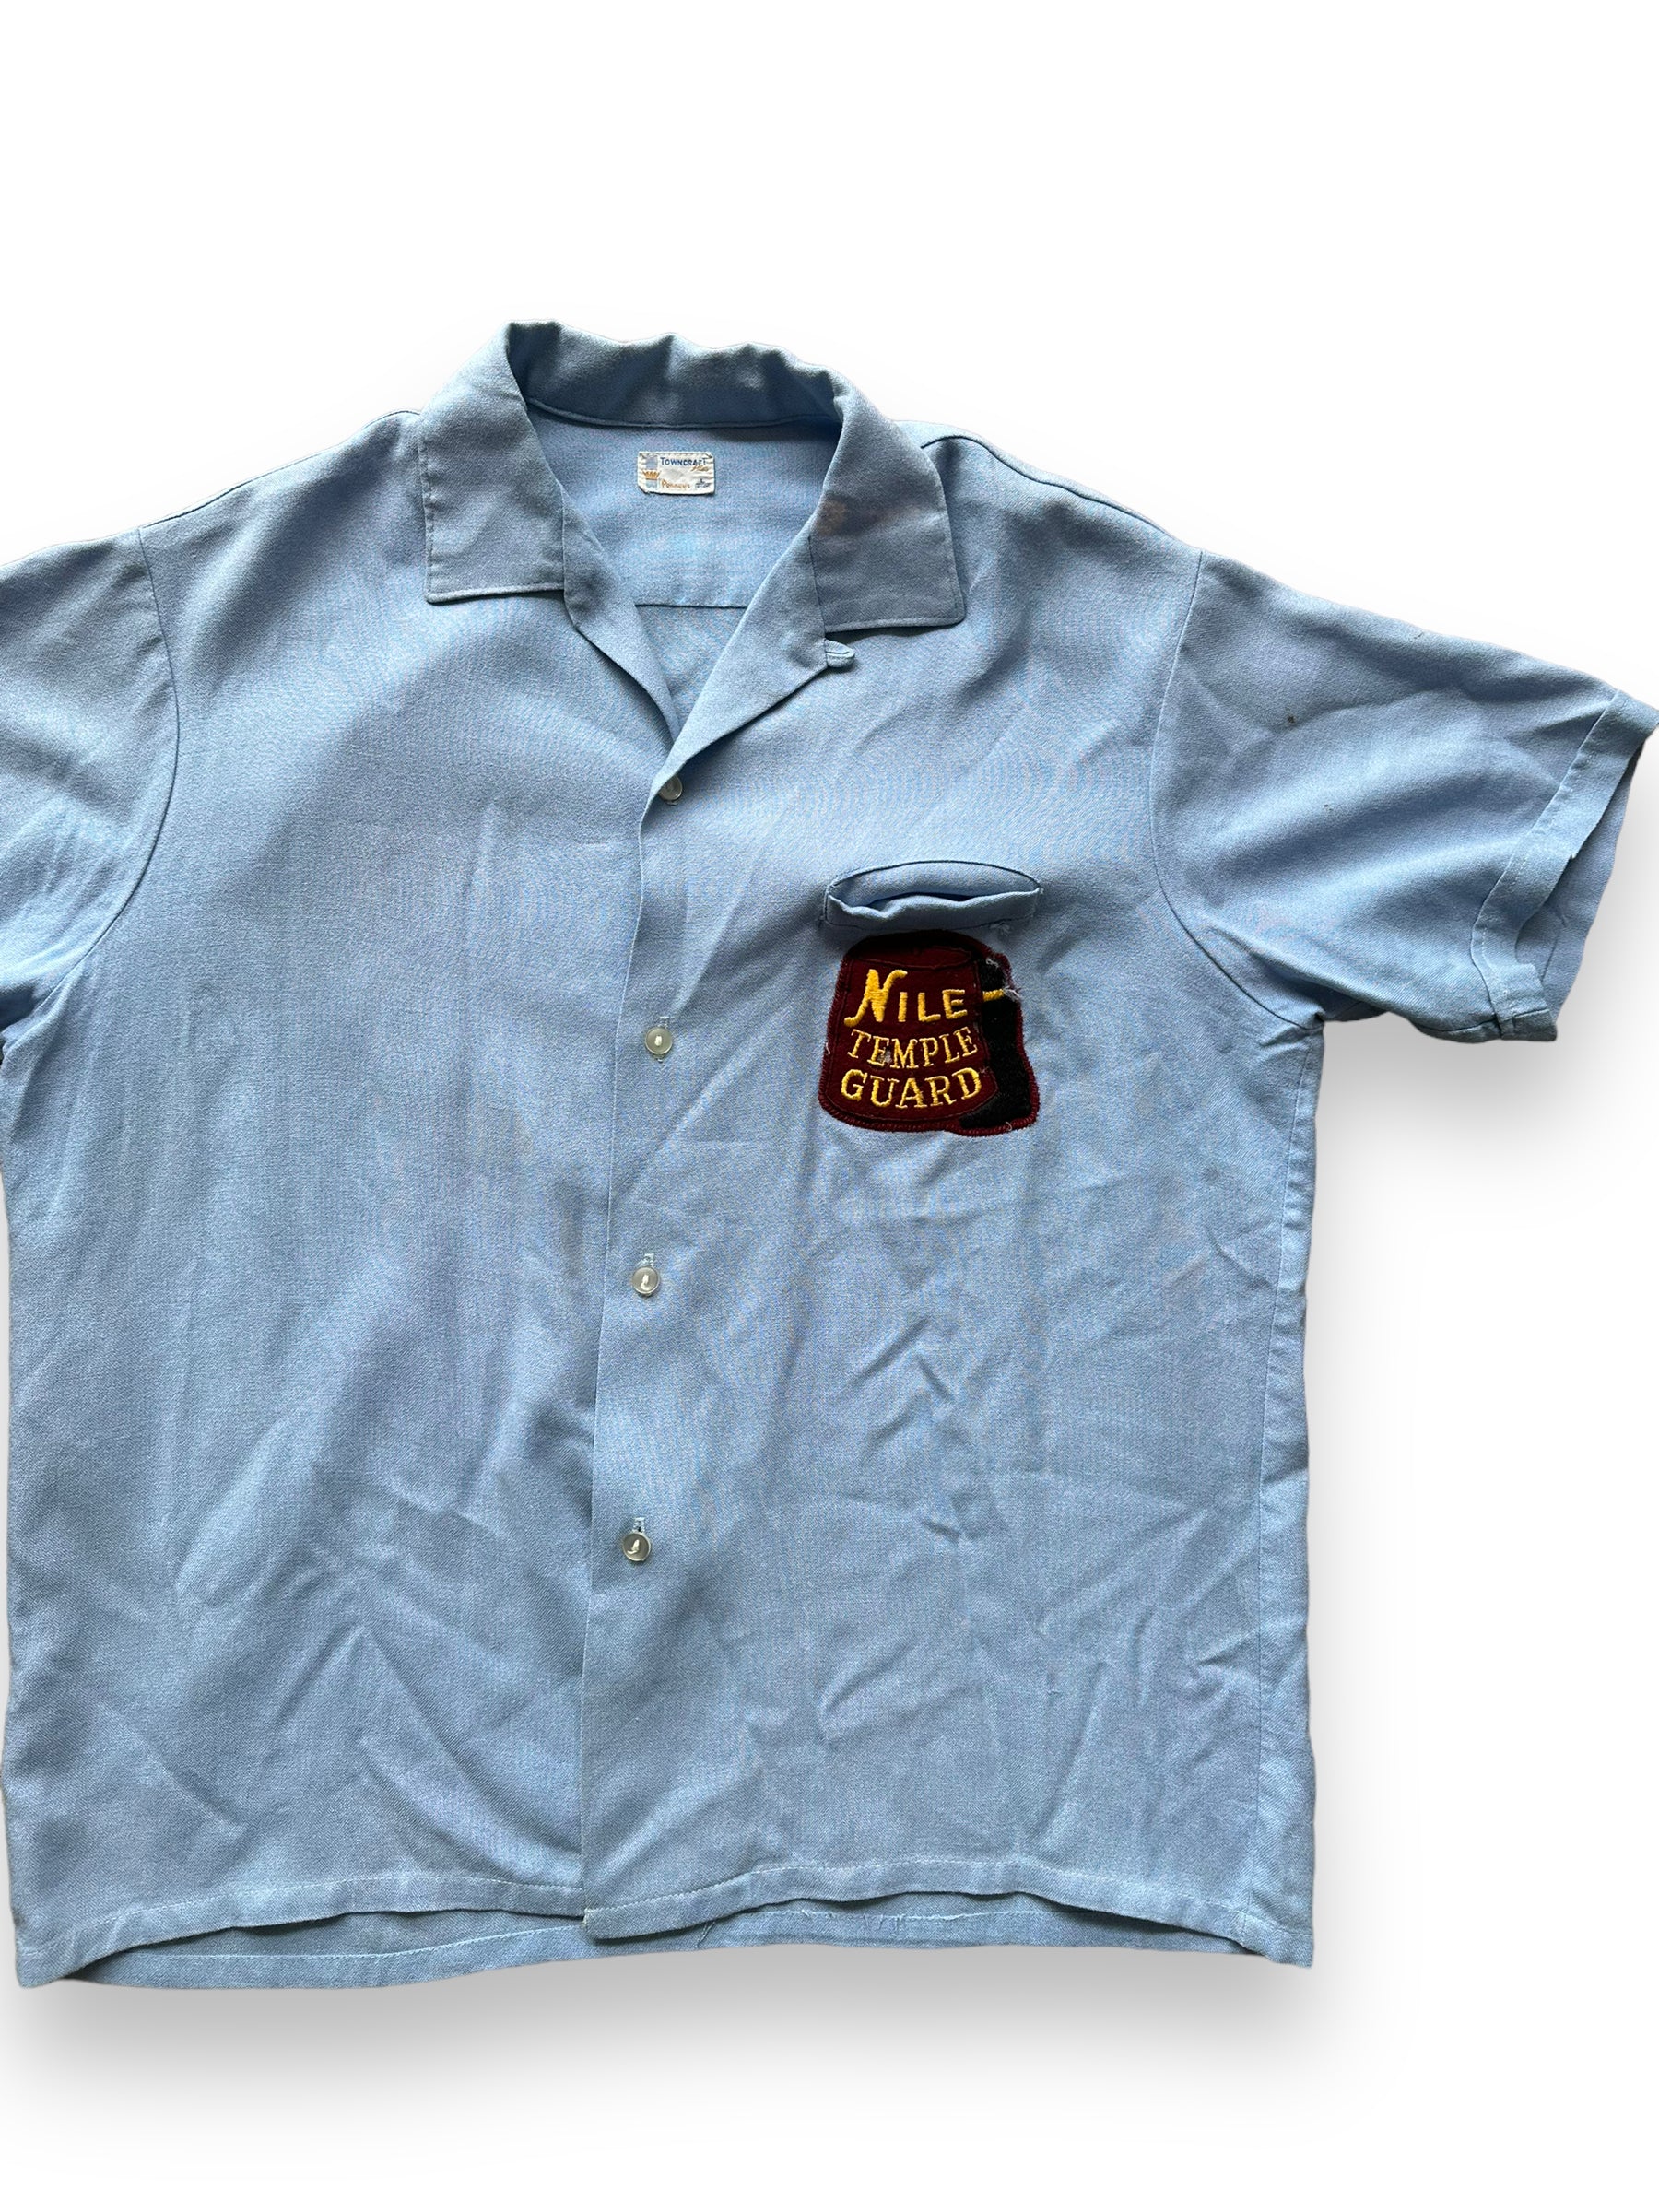 Front left of Vintage "Nile Temple Guard" Chainstitched Bowling Shirt SZ L | Vintage Bowling Shirt Seattle | Barn Owl Vintage Seattle